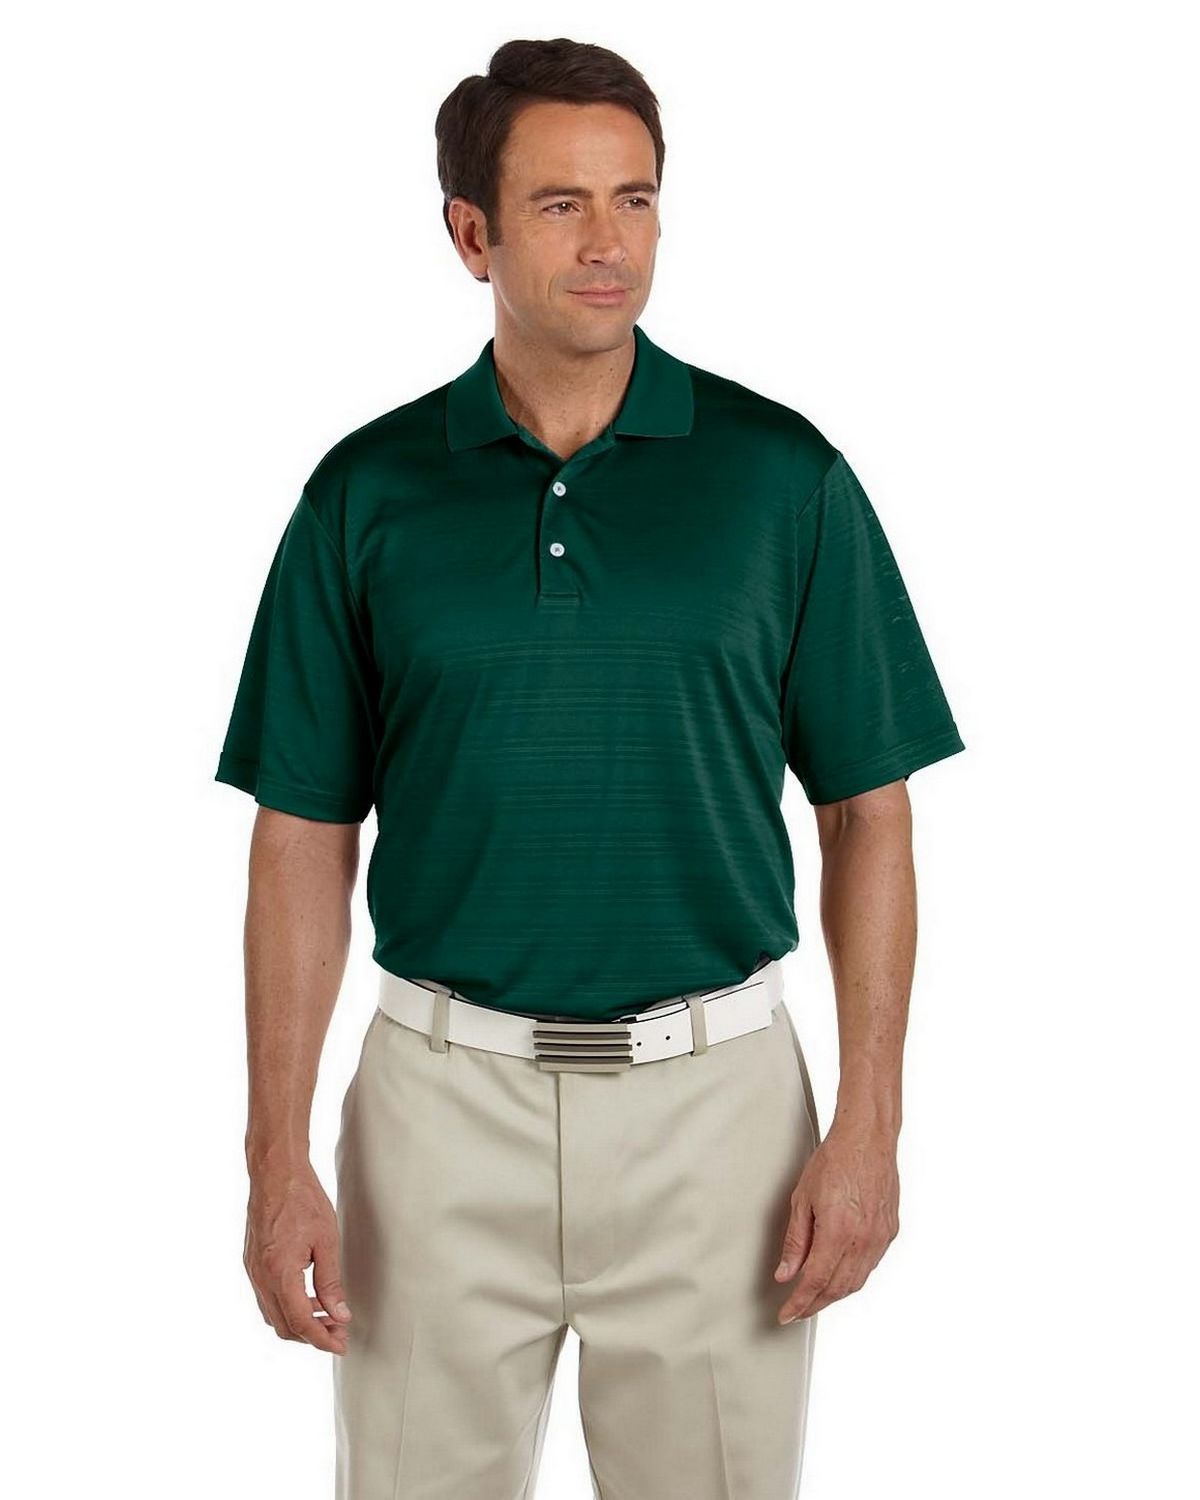 Adidas Golf A161 Men’s ClimaLite Textured Short-Sleeve Polo